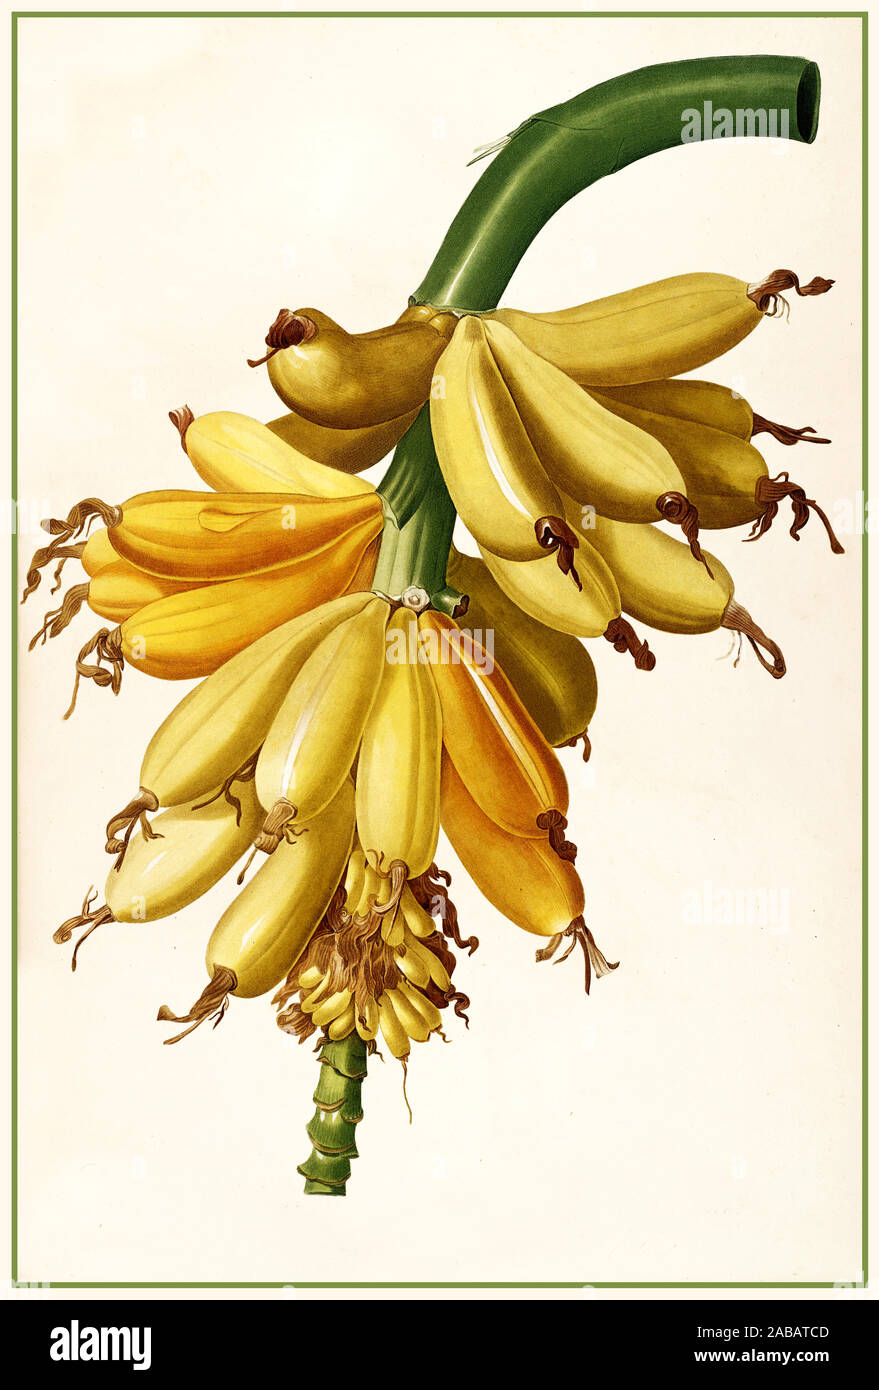 BANANA Vintage 1800's historic 19th Century fruit lithograph illustration Banana plant by Pierre-Joseph Redouté : Bananier cultivé - Musa paradisiaca - (Les Liliacées, 1802-1816) Stock Photo